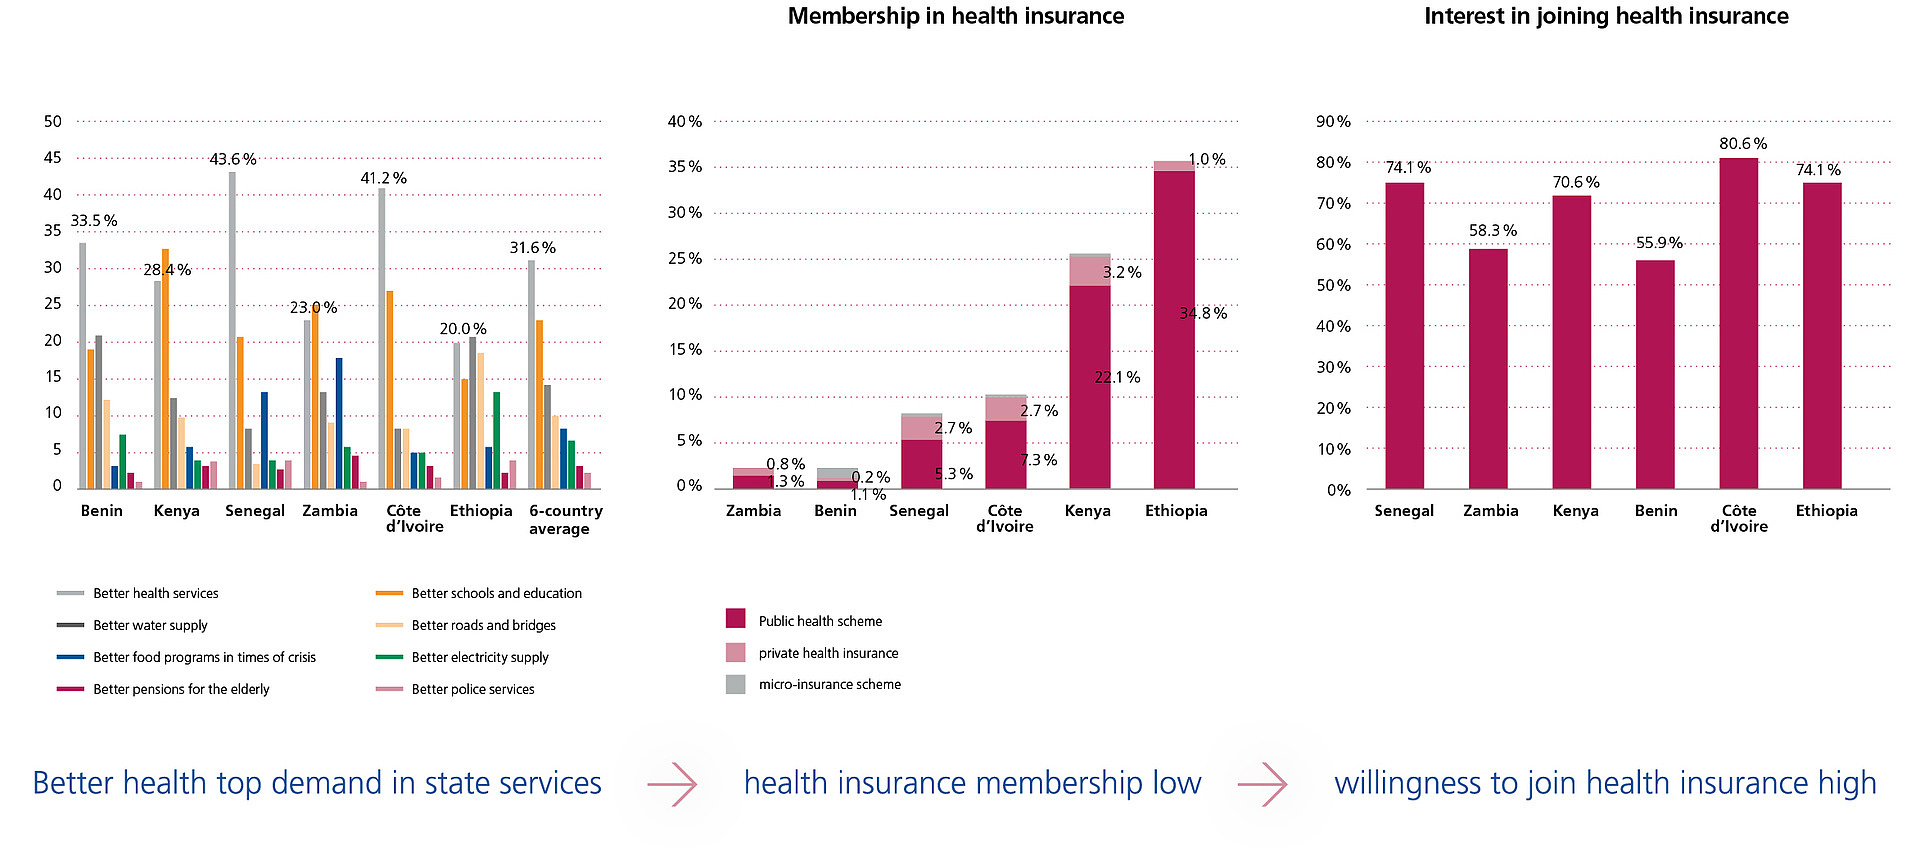 Traub Einzelgrafik gesamt. "Membership in health insurance", "interest in joining health insurance".